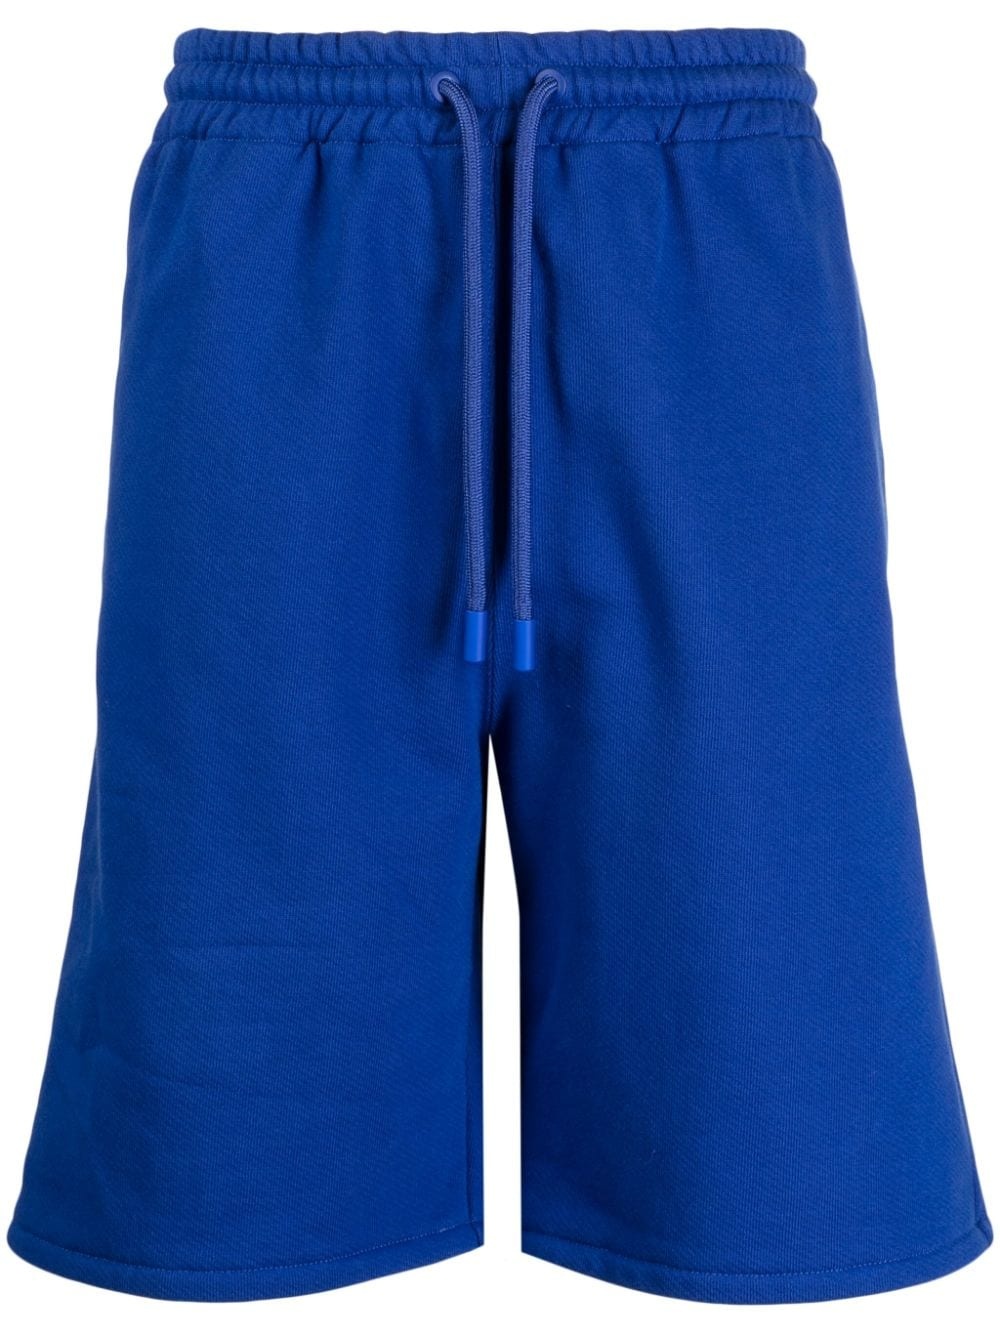 Stitch Diag cotton track shorts - 1